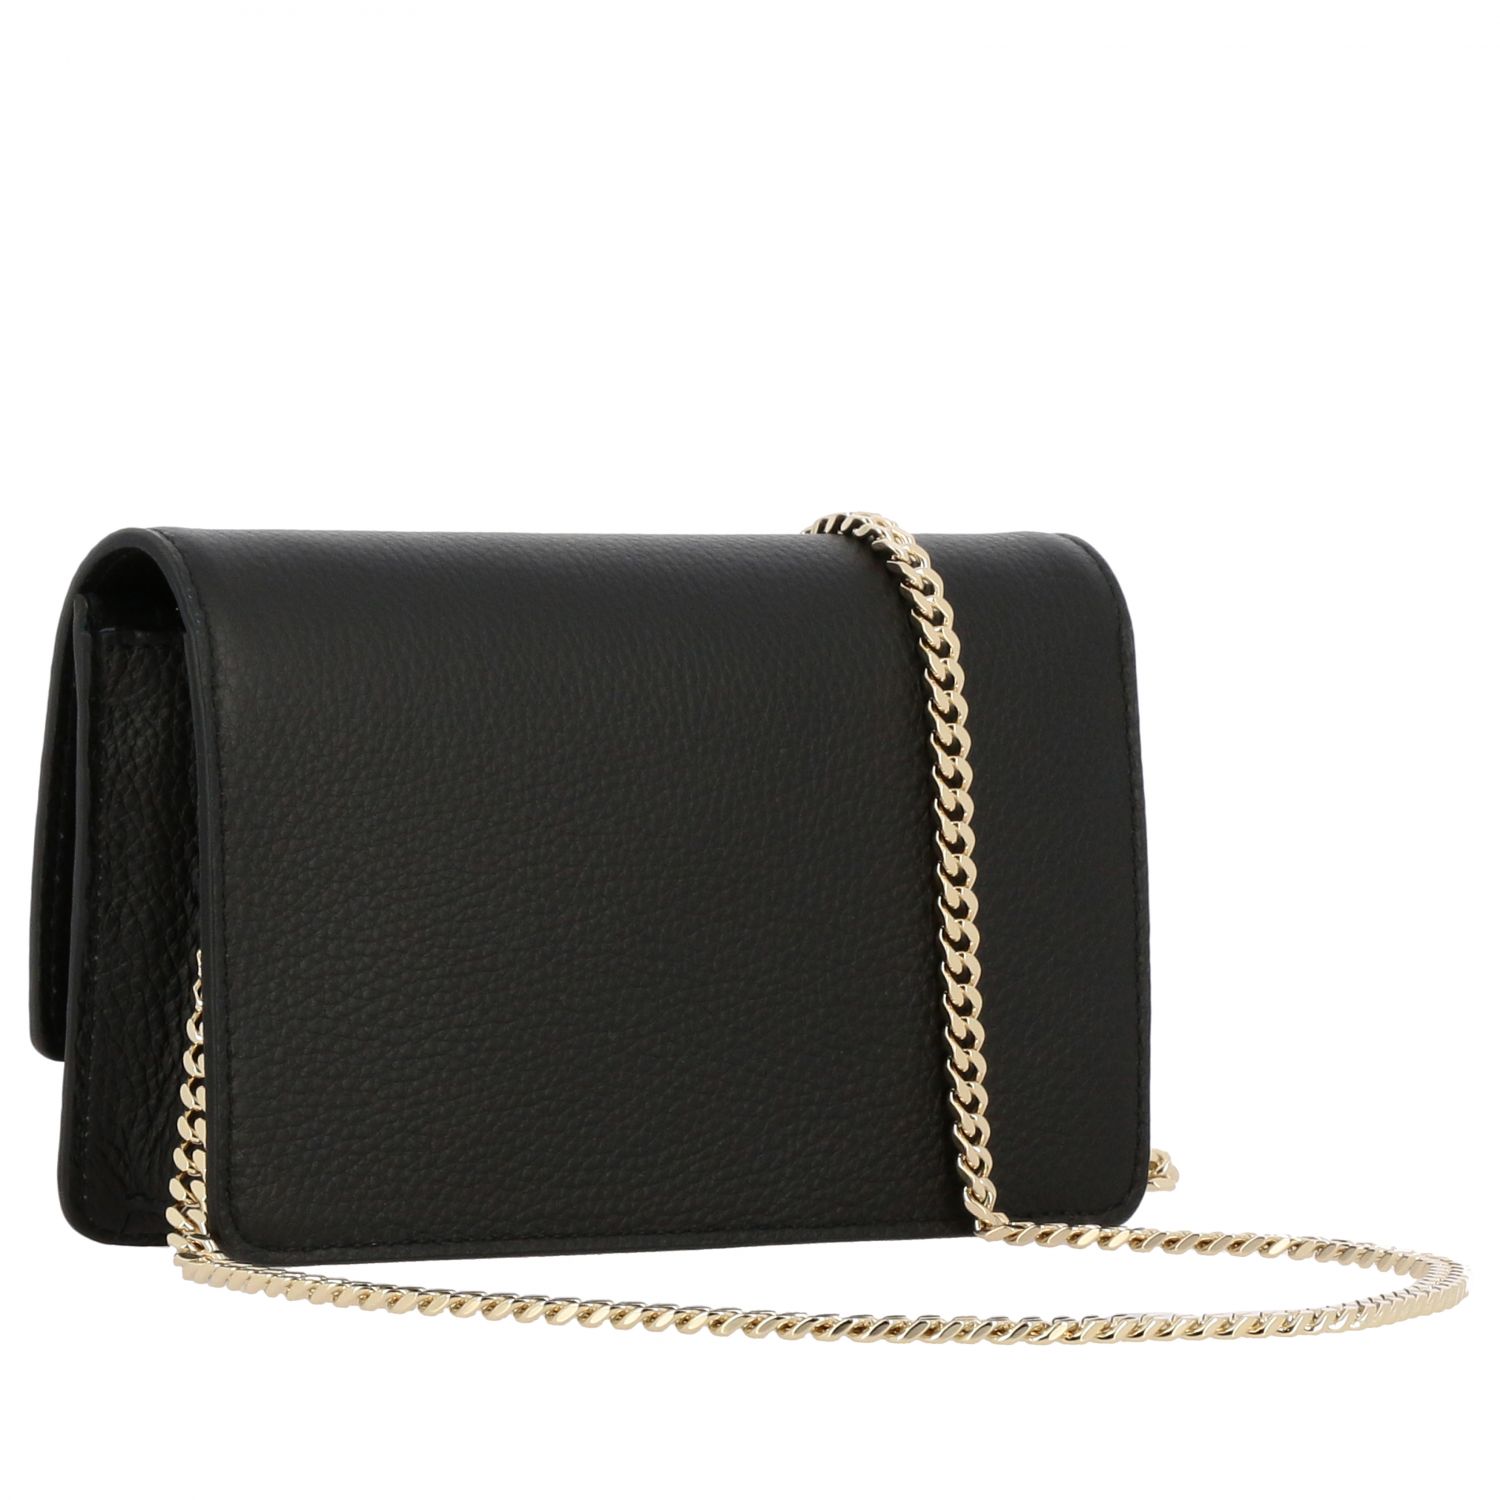 Versace Outlet: Shoulder bag women | Mini Bag Versace Women Black ...